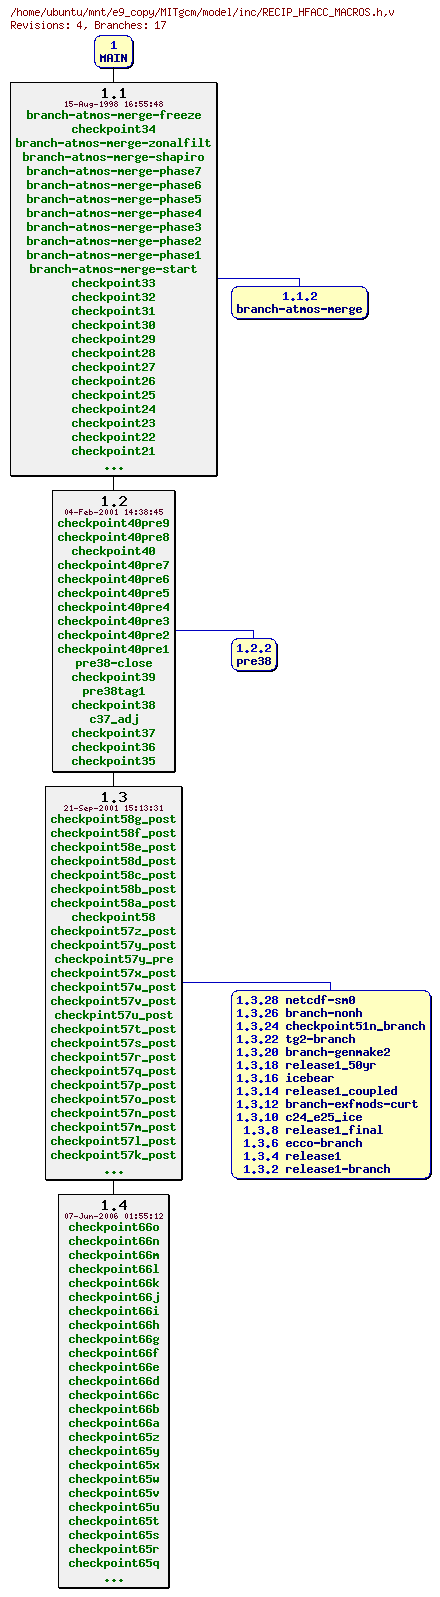 Revisions of MITgcm/model/inc/RECIP_HFACC_MACROS.h